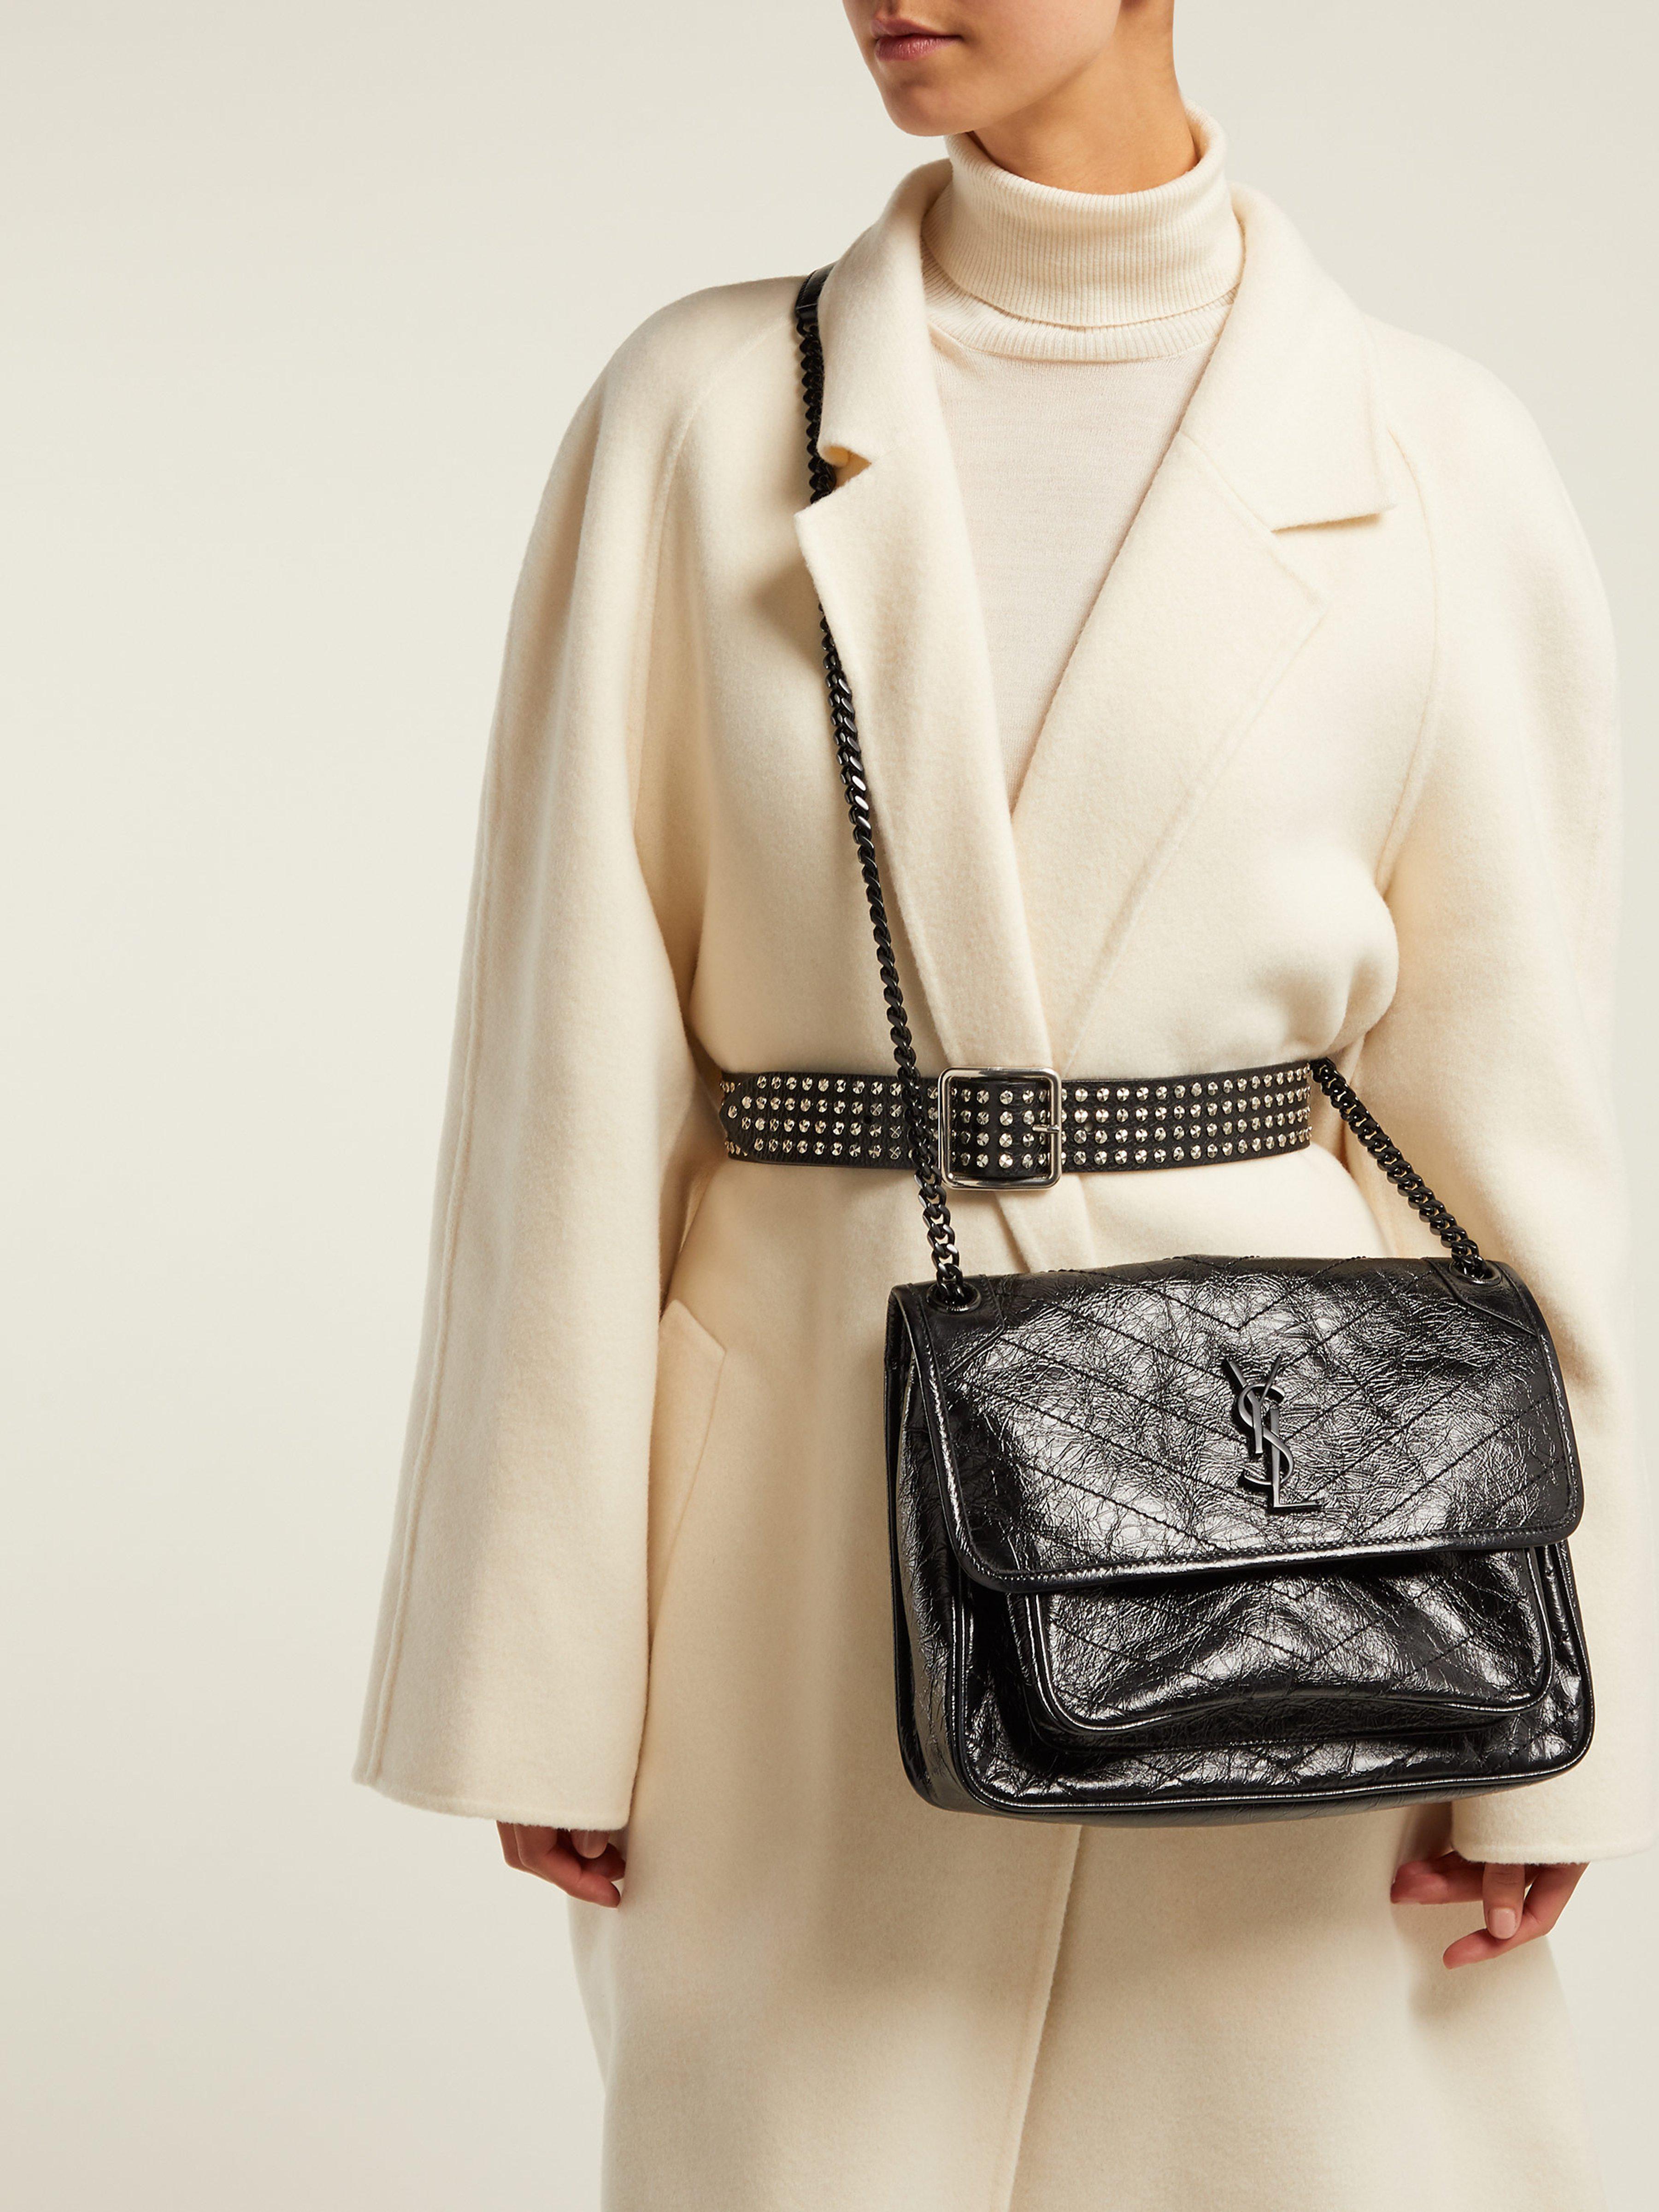 Saint Laurent Niki Medium Leather Shoulder Bag in Black - Lyst